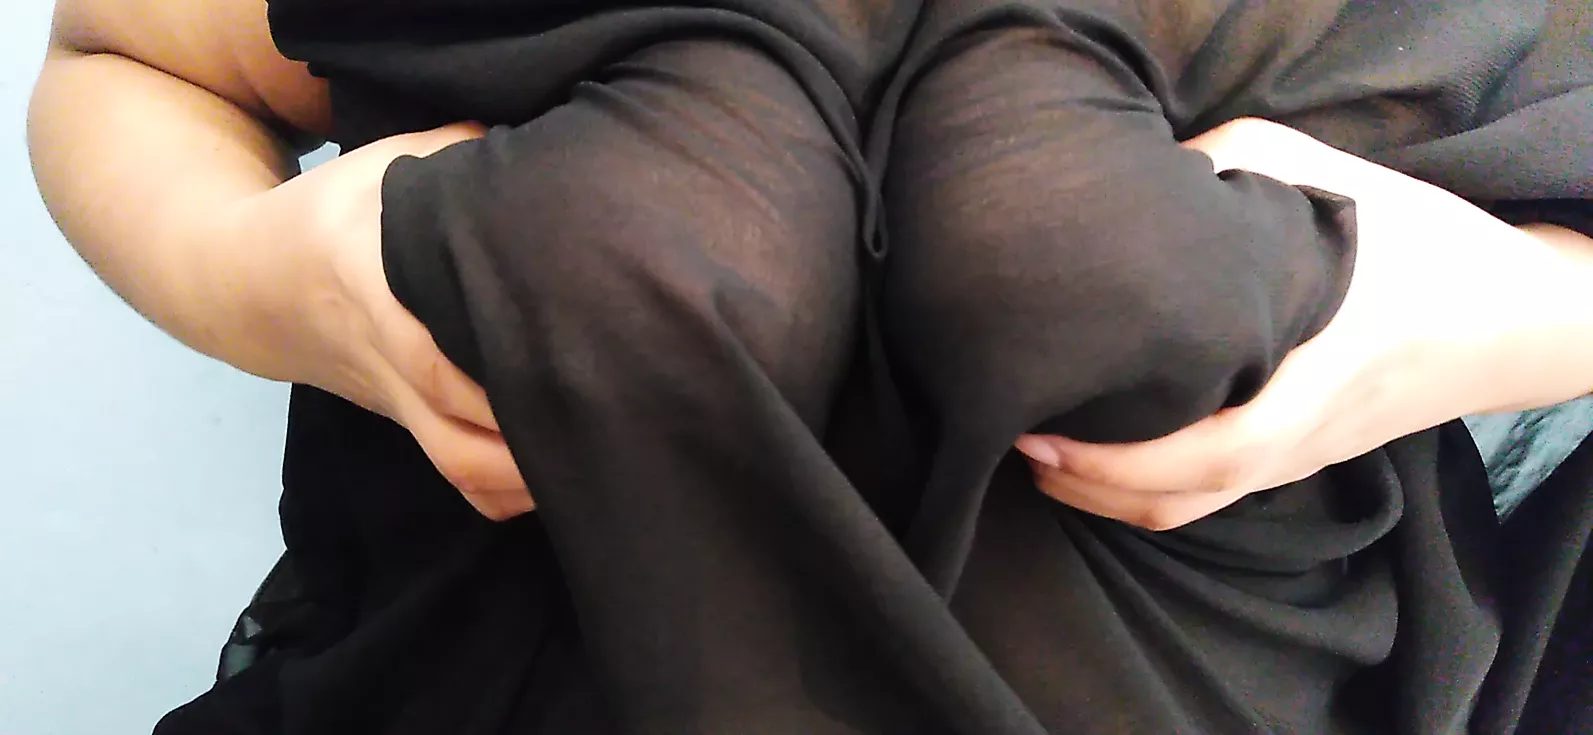 Arab Housewife Naked Video